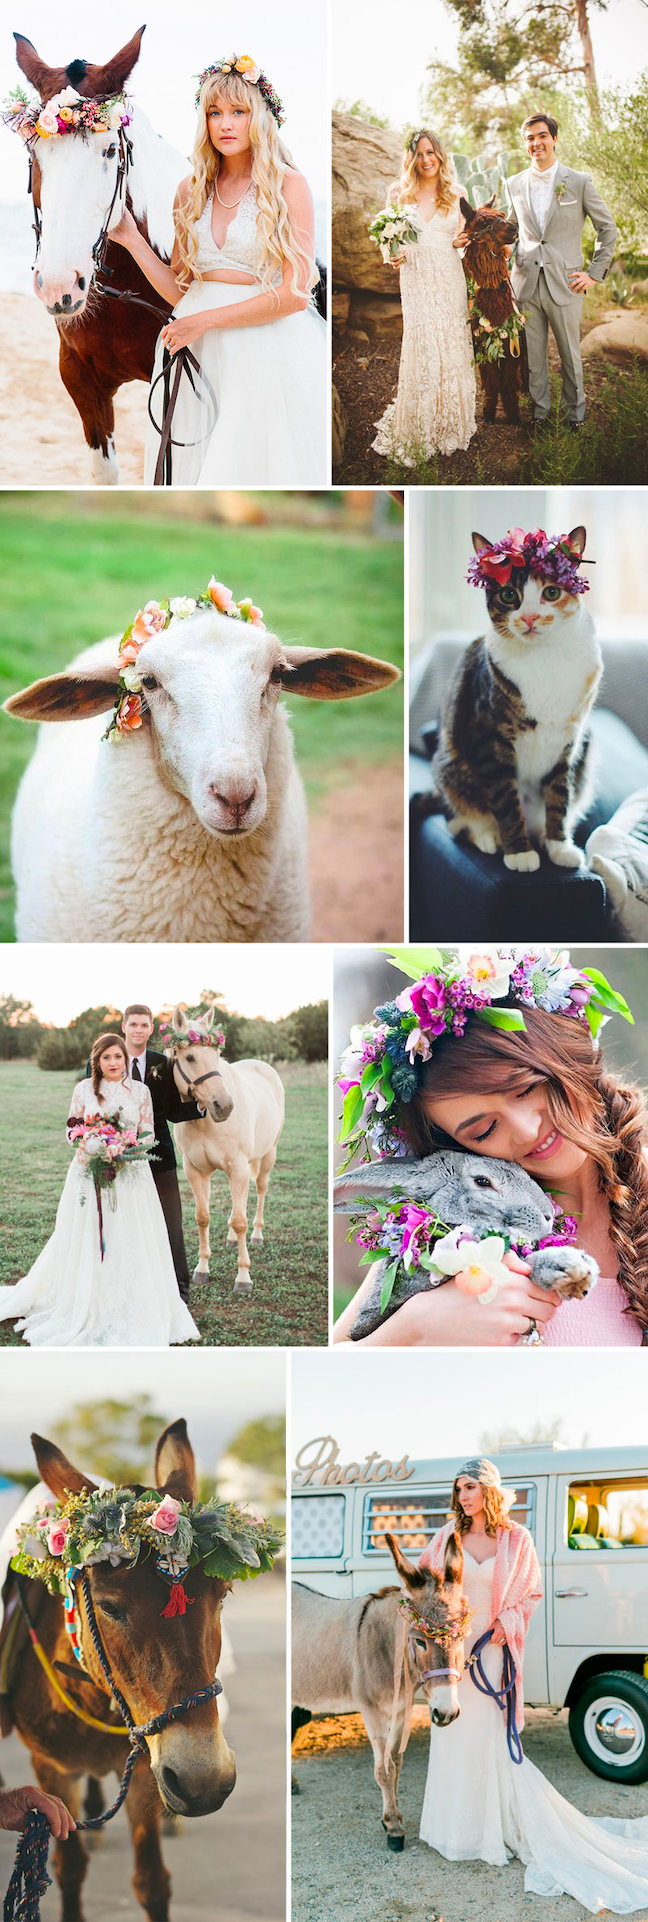 Animals wearing floral wedding crowns.